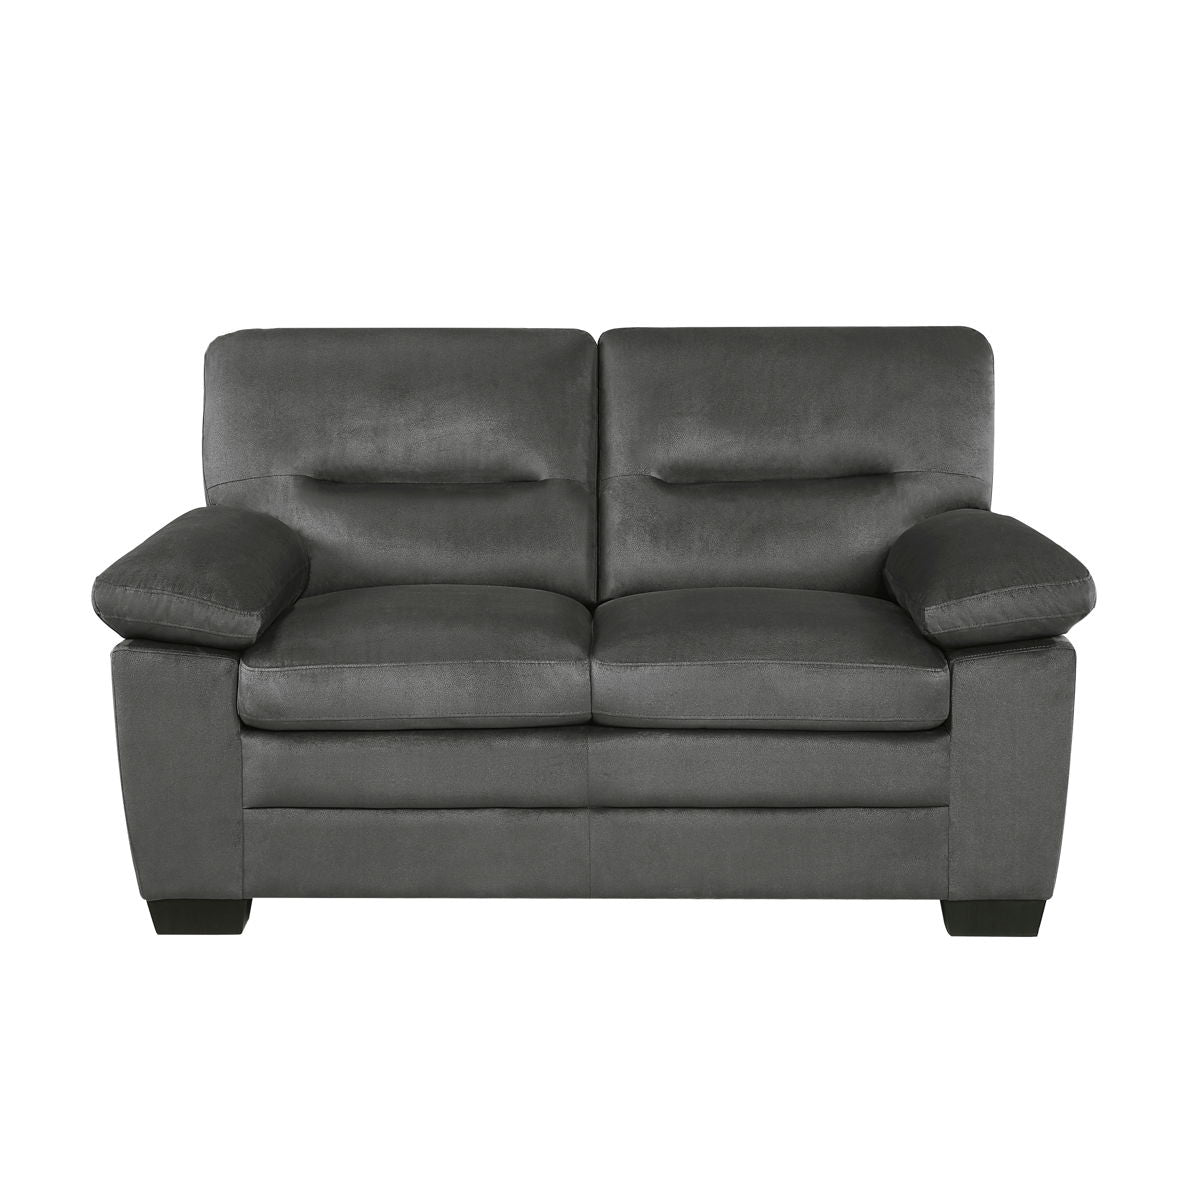 Modern Sleek Design Living Room Furniture 1 Piece Loveseat Dark Gray Fabric Upholstered Comfortable Plush Seating